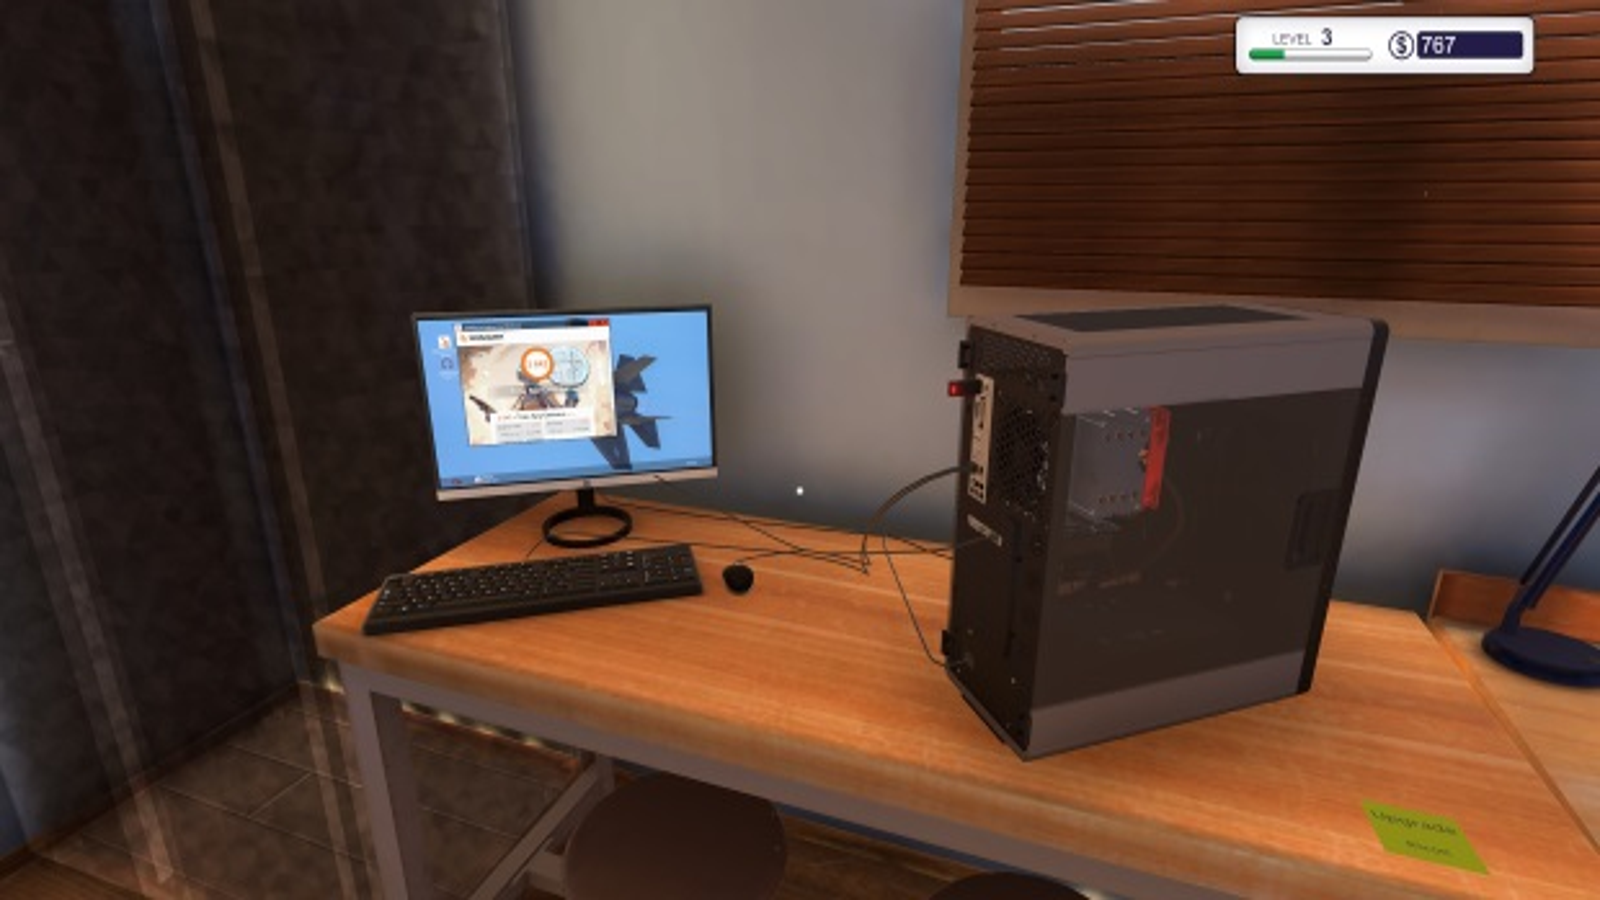 Análise, PC Building Simulator (PC)